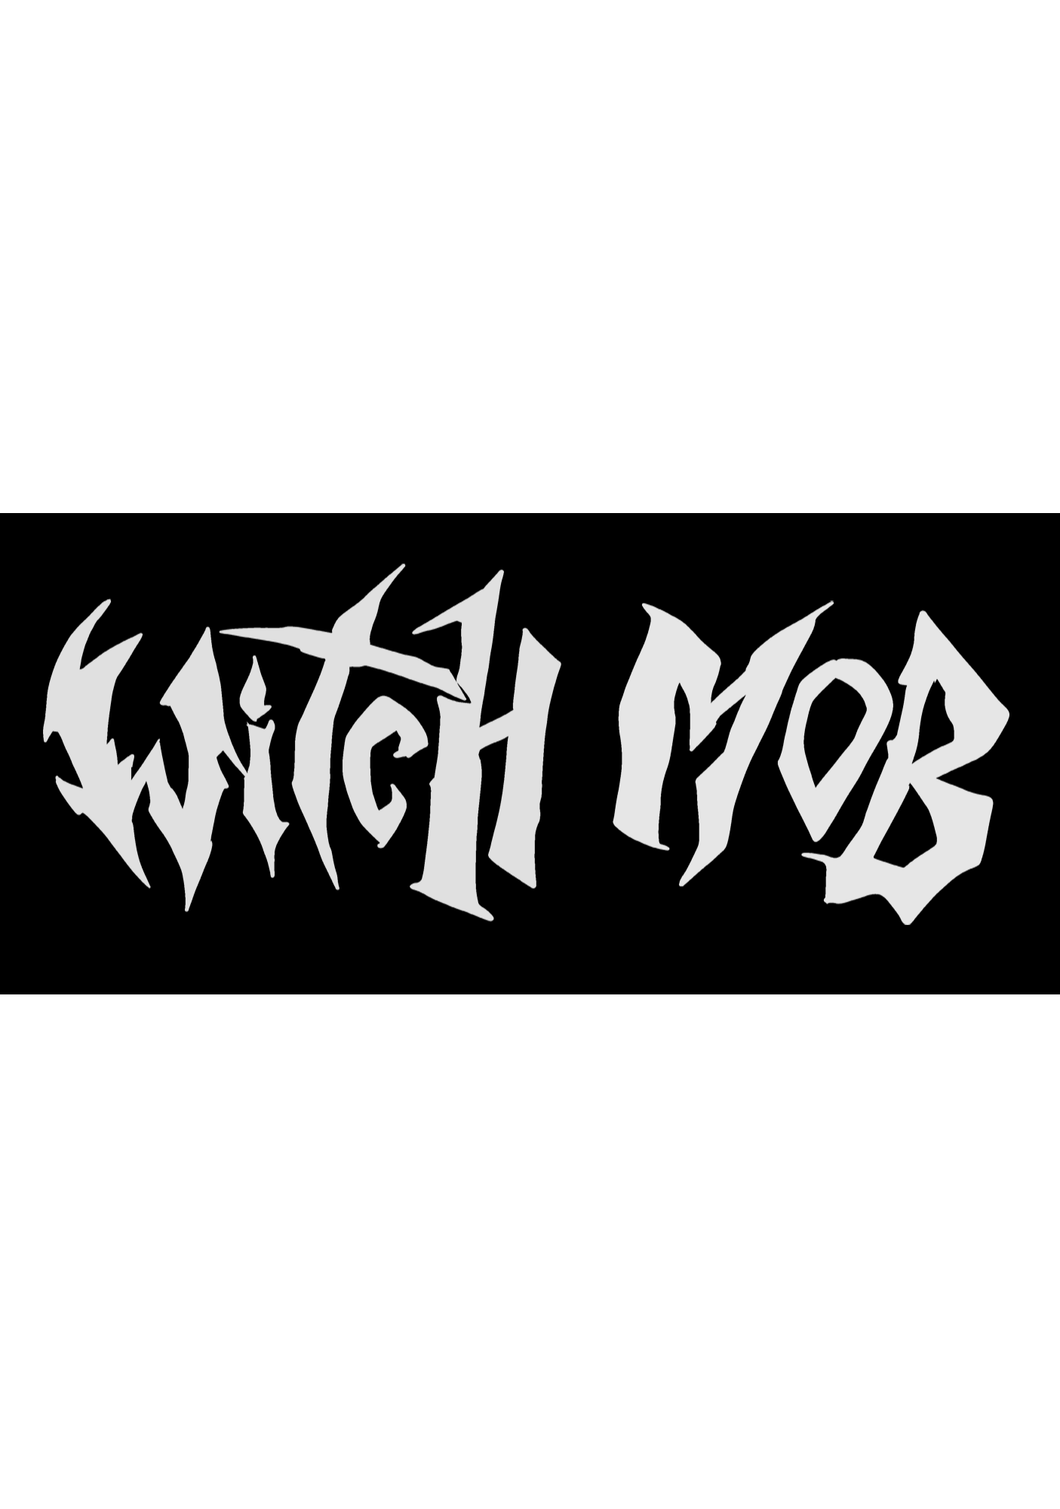 Classic Witch Mob Logo Sticker